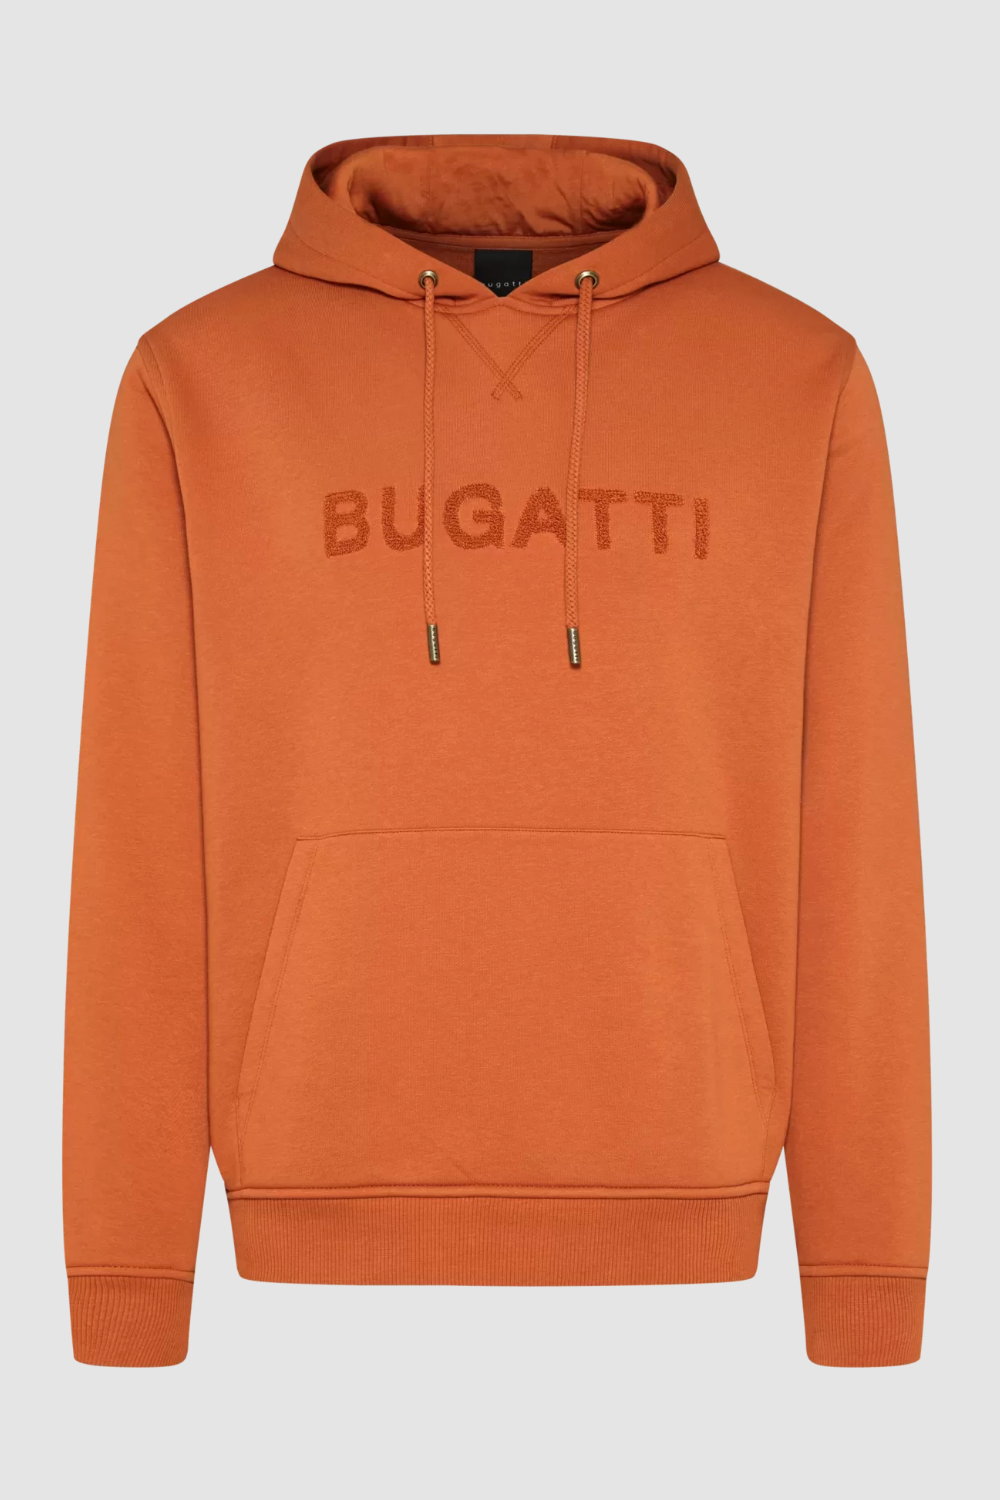 Bugatti hoodie chrisjameskingston – orange in